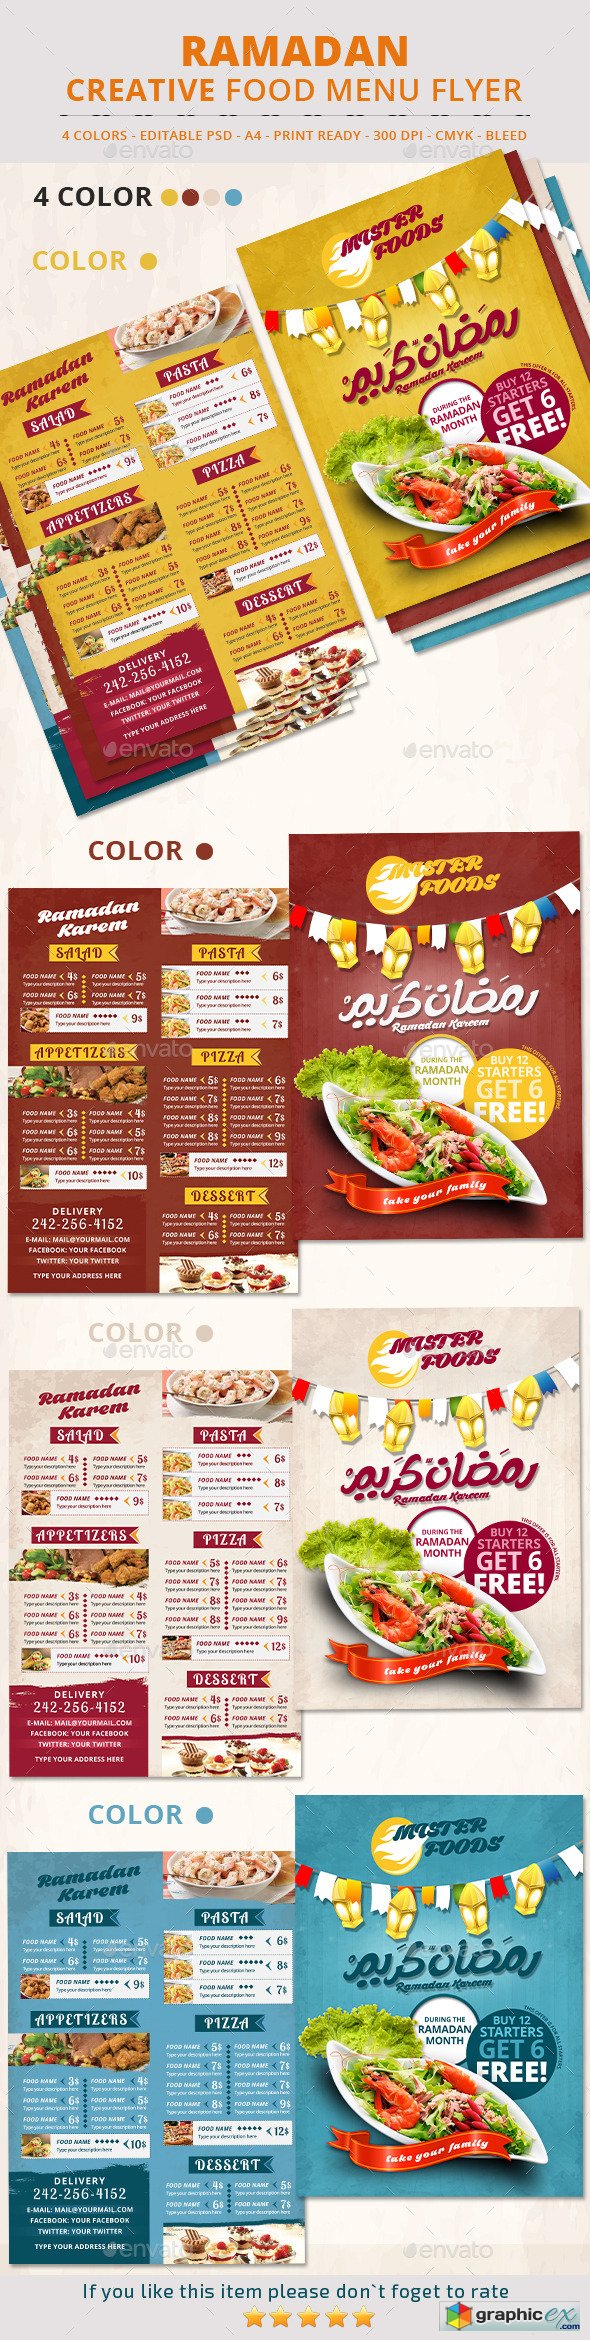 Food Menu Flyer - Ramadan